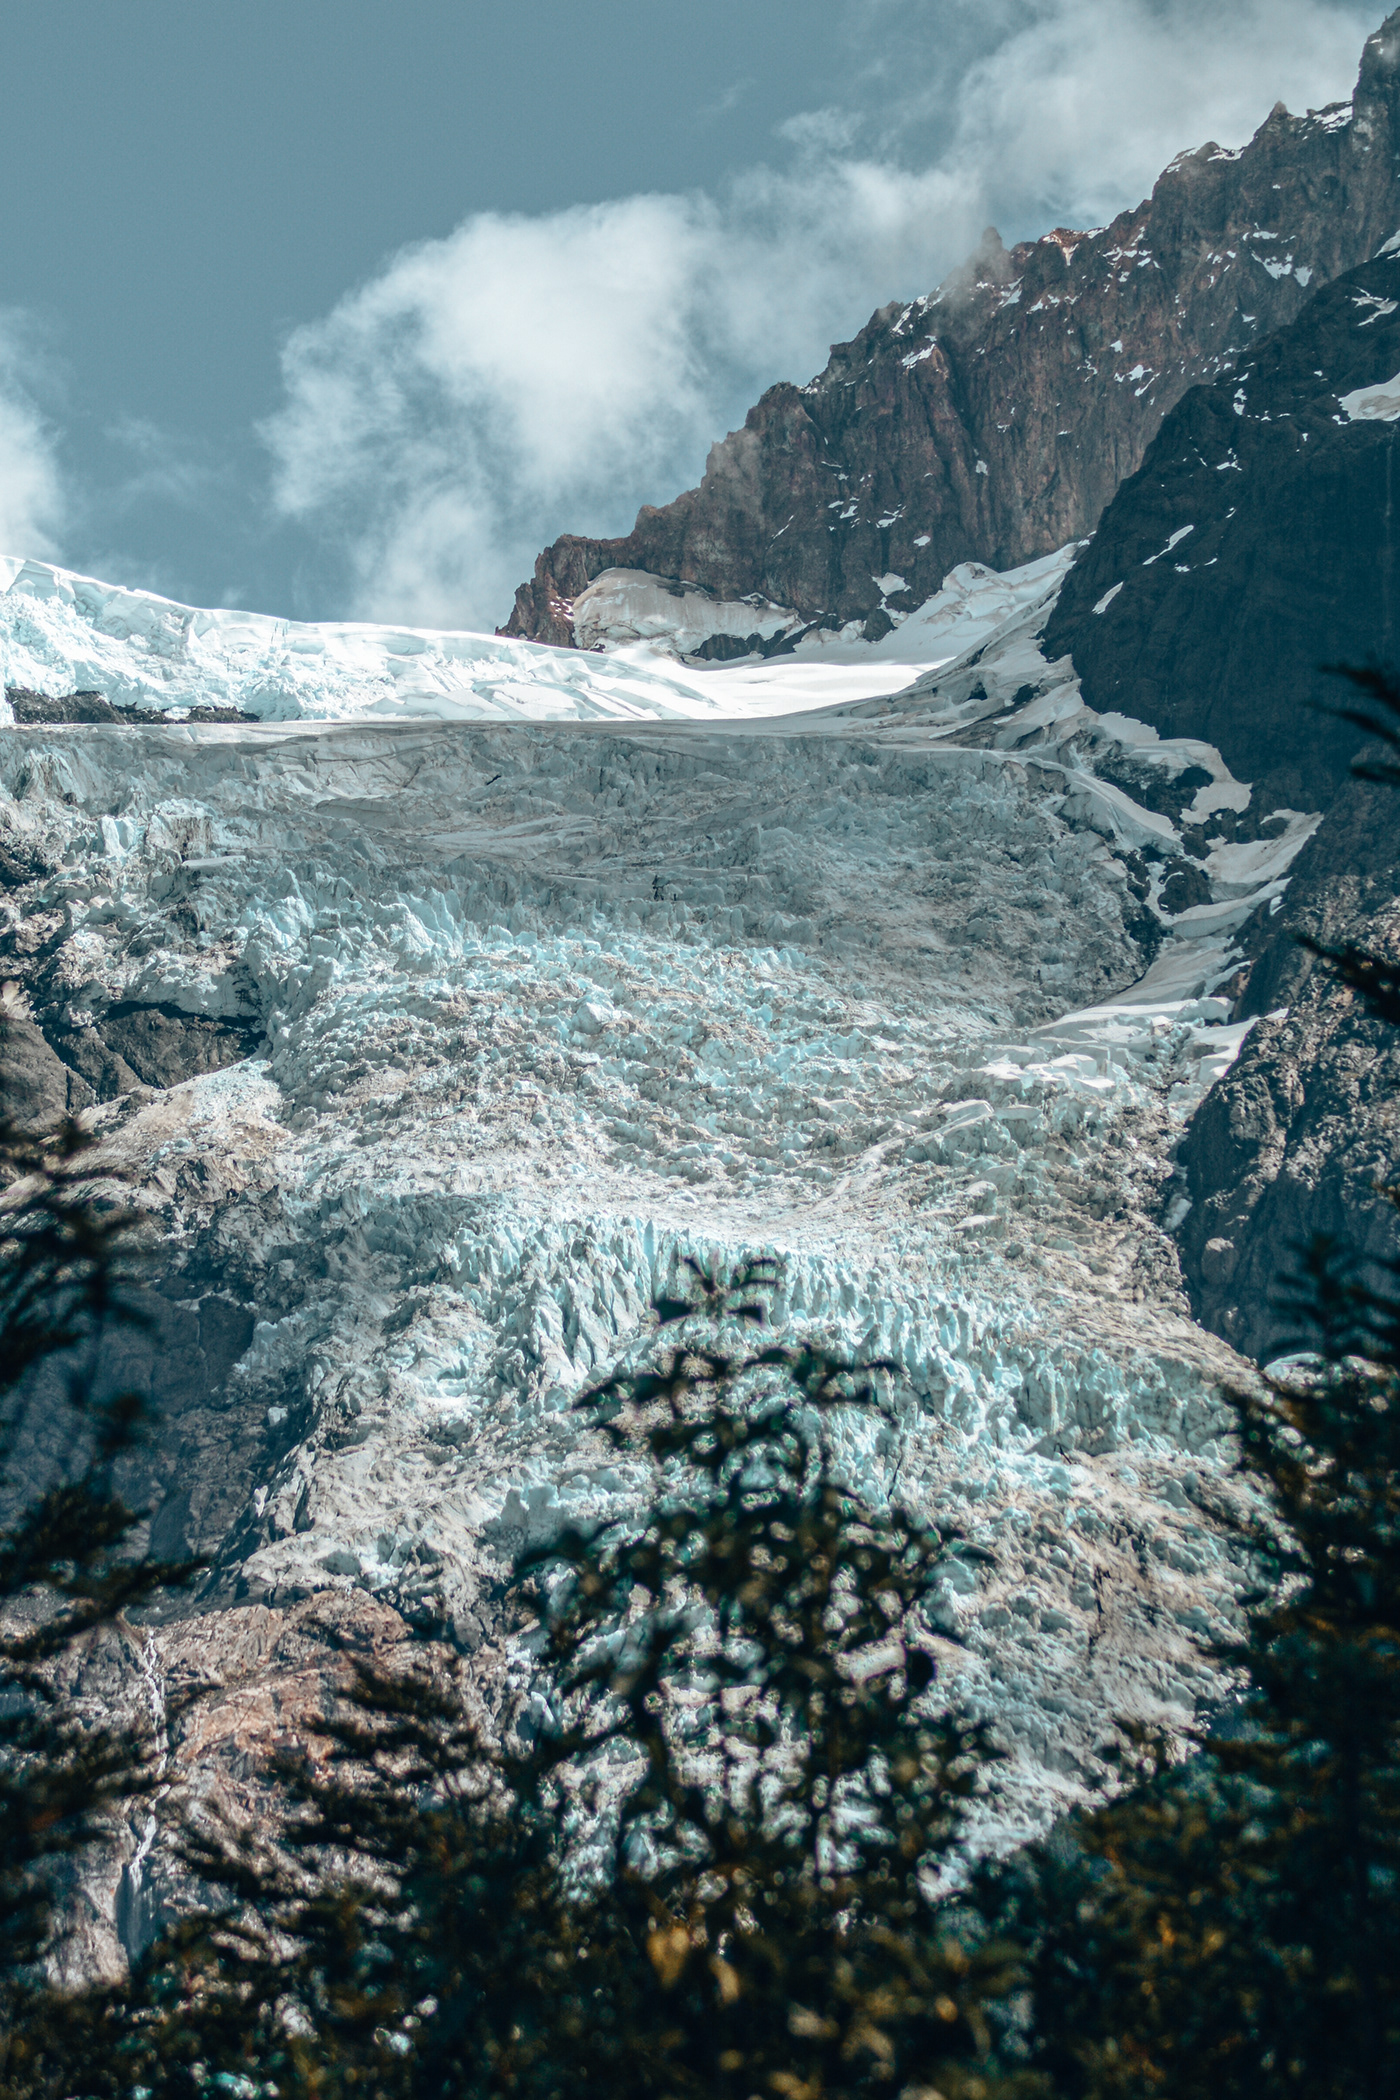 Outdoor patagonia surdechile Nature Landscape mountains Coyhaique futaleufu glaciar southofchile